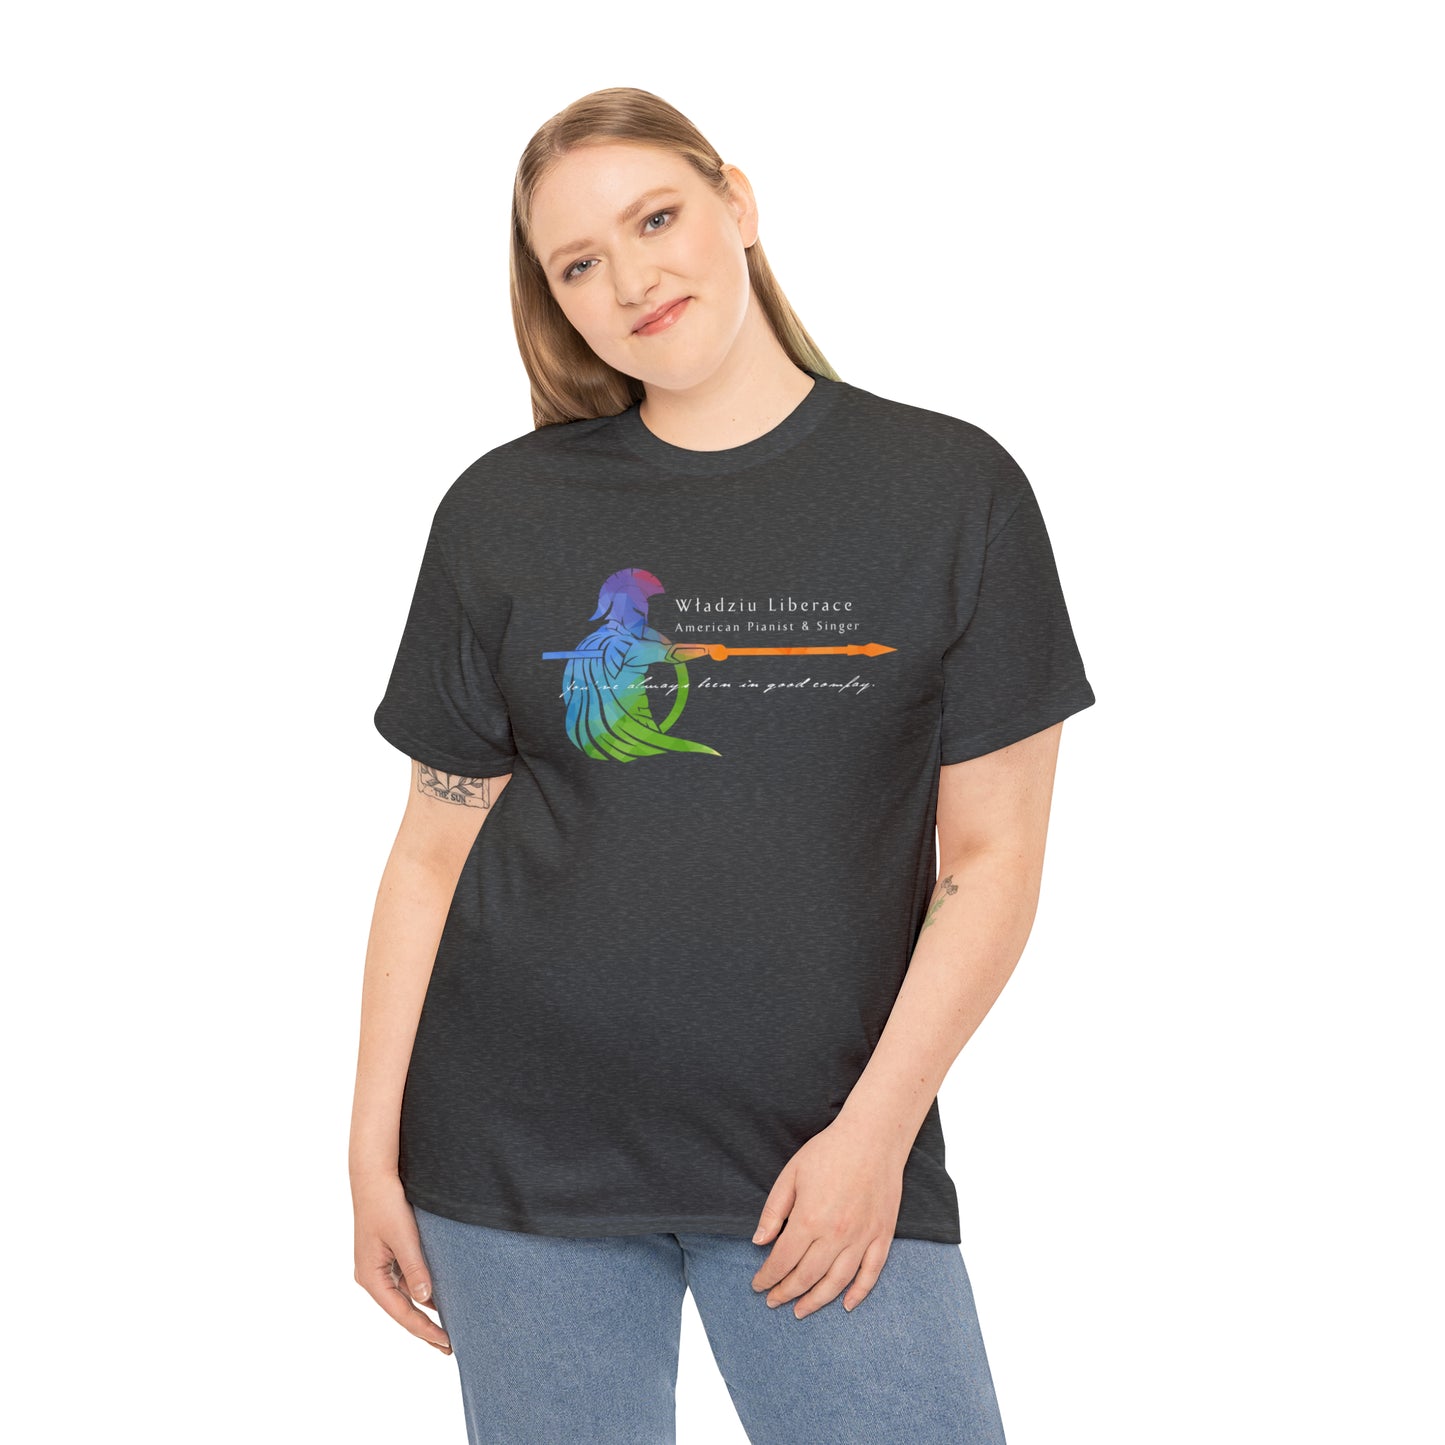 Władziu Liberace | American Pianist & Singer | Pride T-Shirt